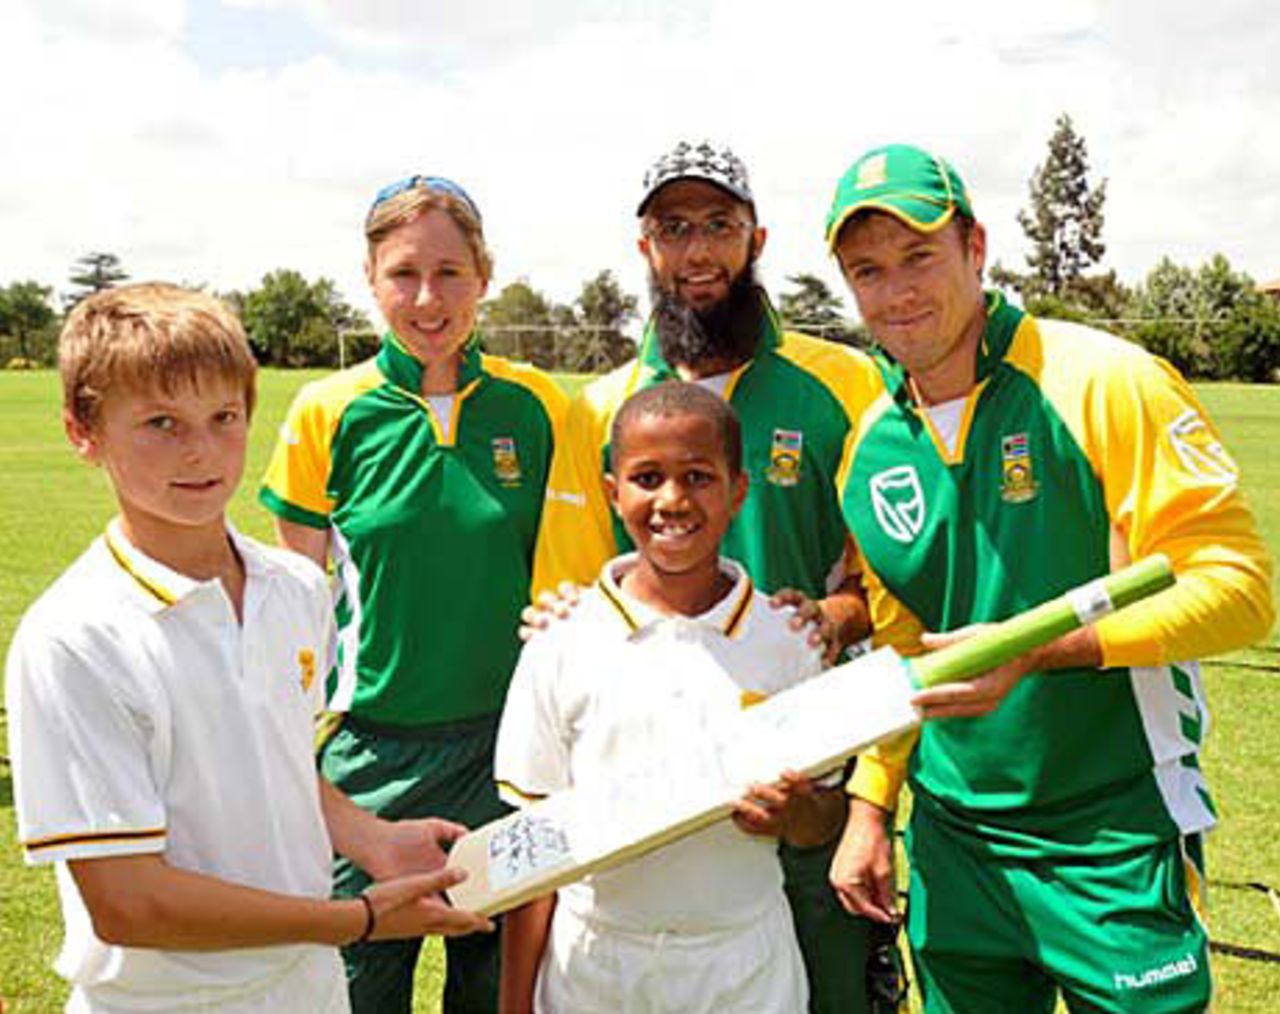 Cri-zelda Brits, Hashim Amla and AB de Villers hand an autographed bat to school children as part of ICC's World Diversity Day, Johannesburg